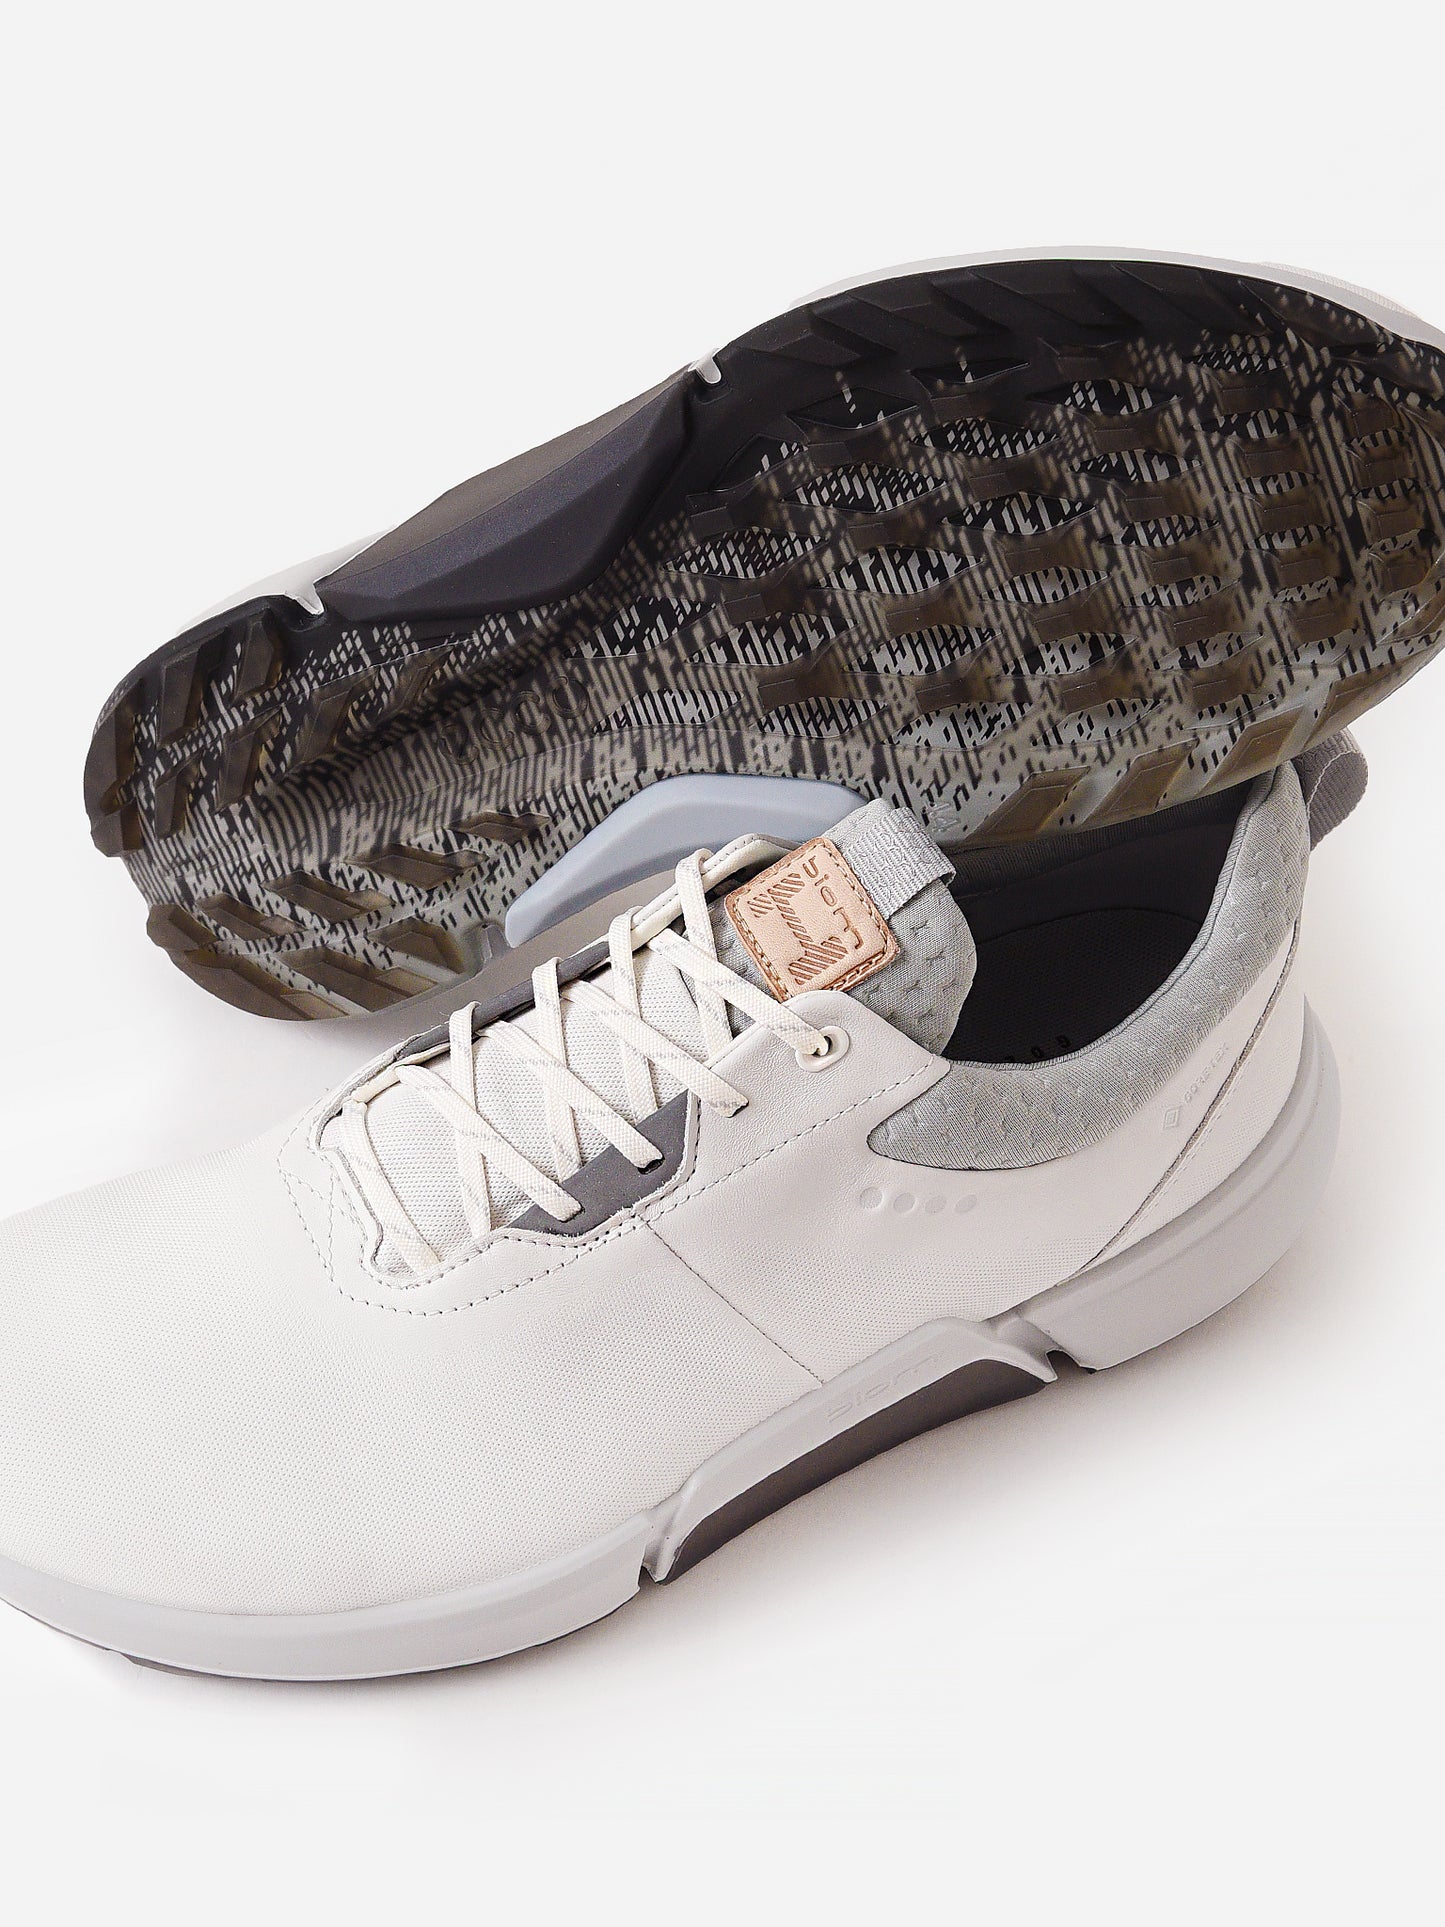 ECCO Men's Biom H4 Golf Shoe